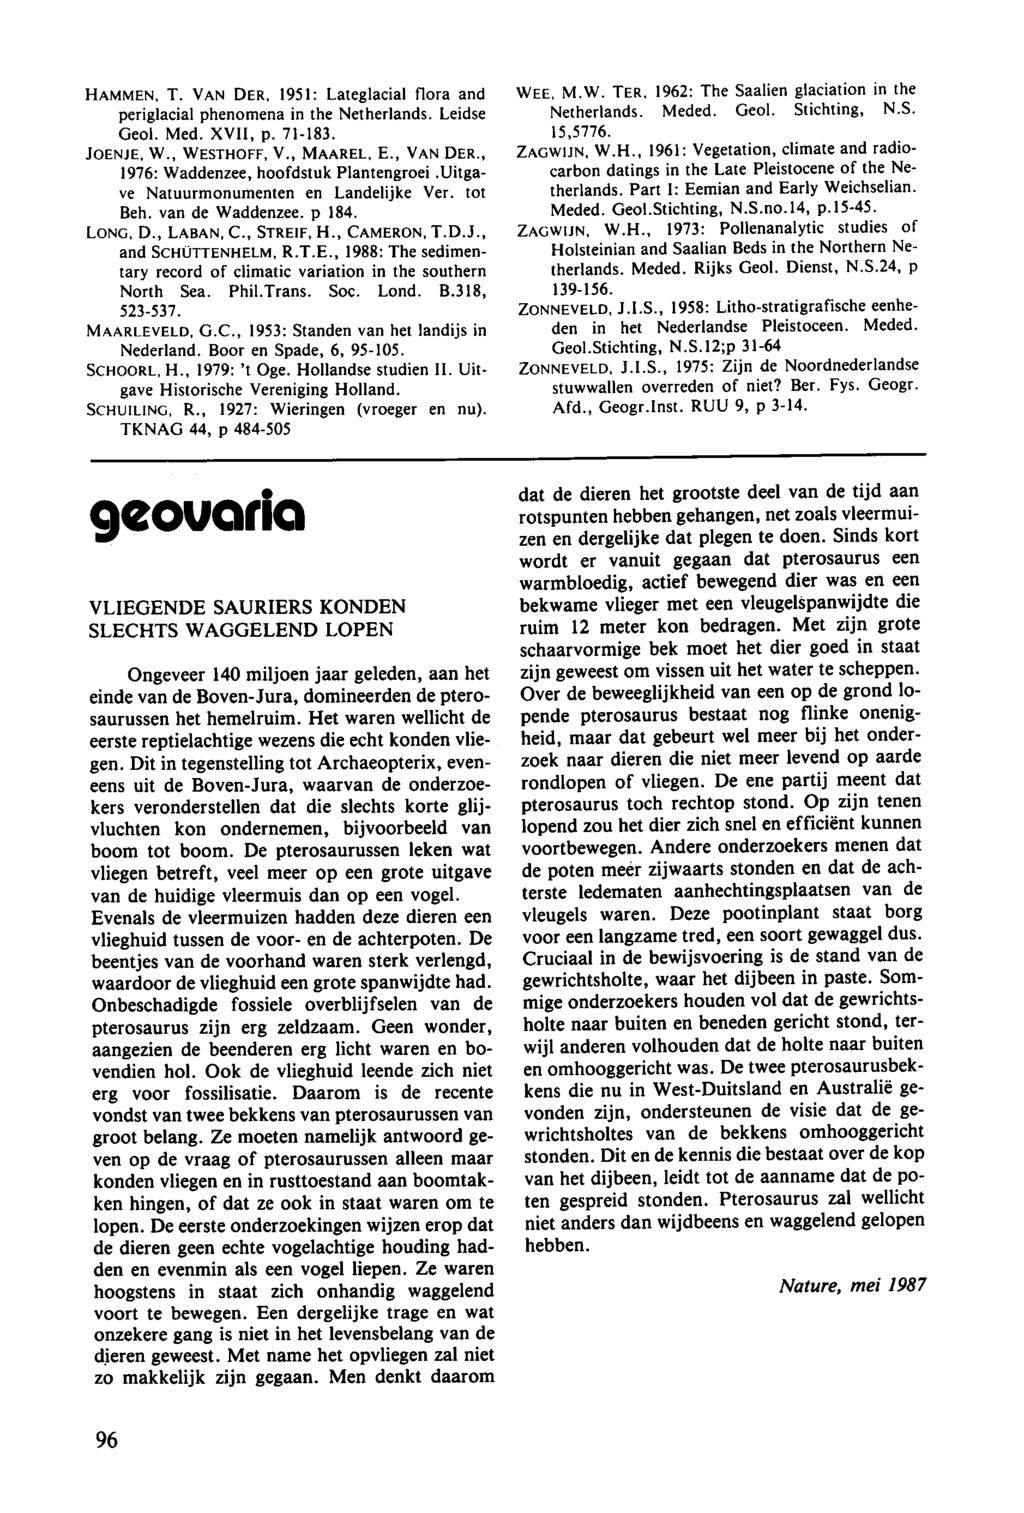 HAMMEN, T. VAN DER, 1951: Lateglacial flora and periglacial phenomena in the Netherlands. Leidse Geol. Med. XVII, p. 71-183. JOENJE, W., WESTHOFF, V., MAAREL, E., VAN DER.